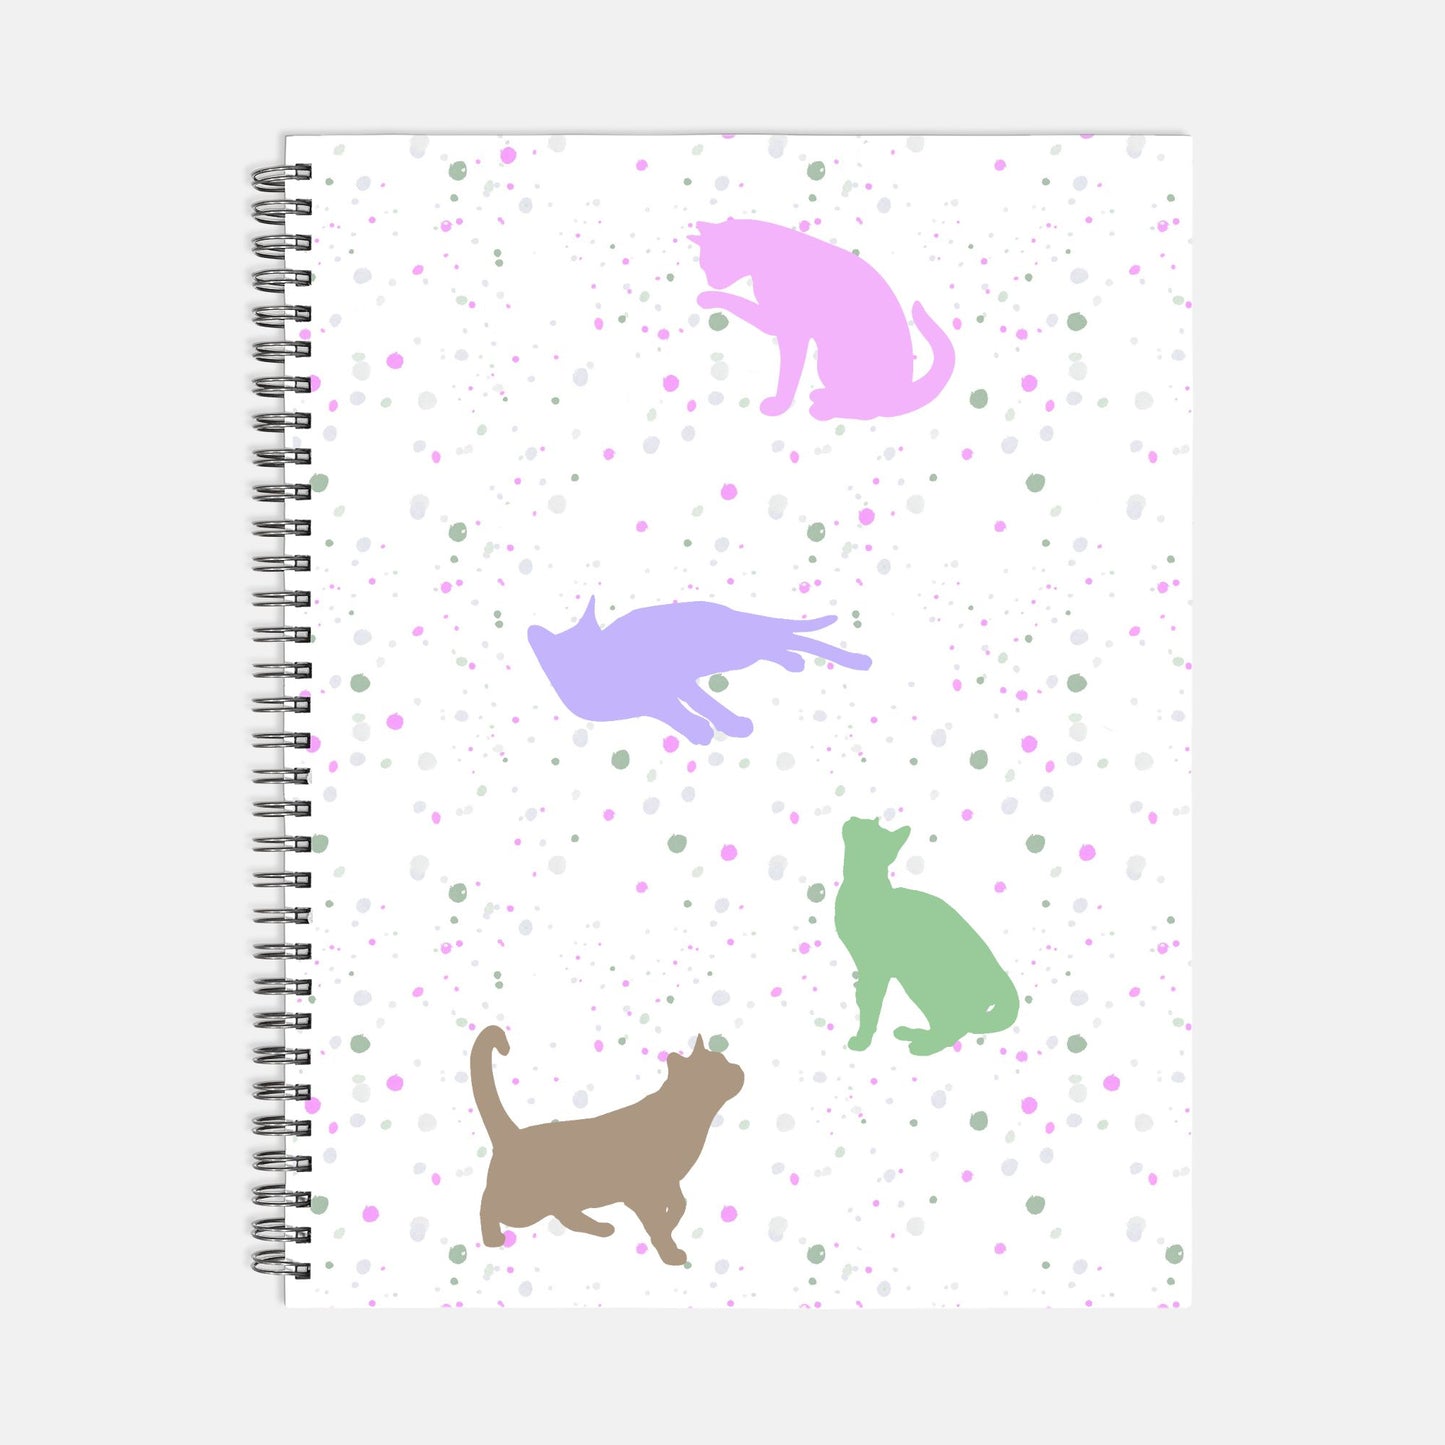 Cat Antics Notebook Hardcover Spiral 8.5 x 11